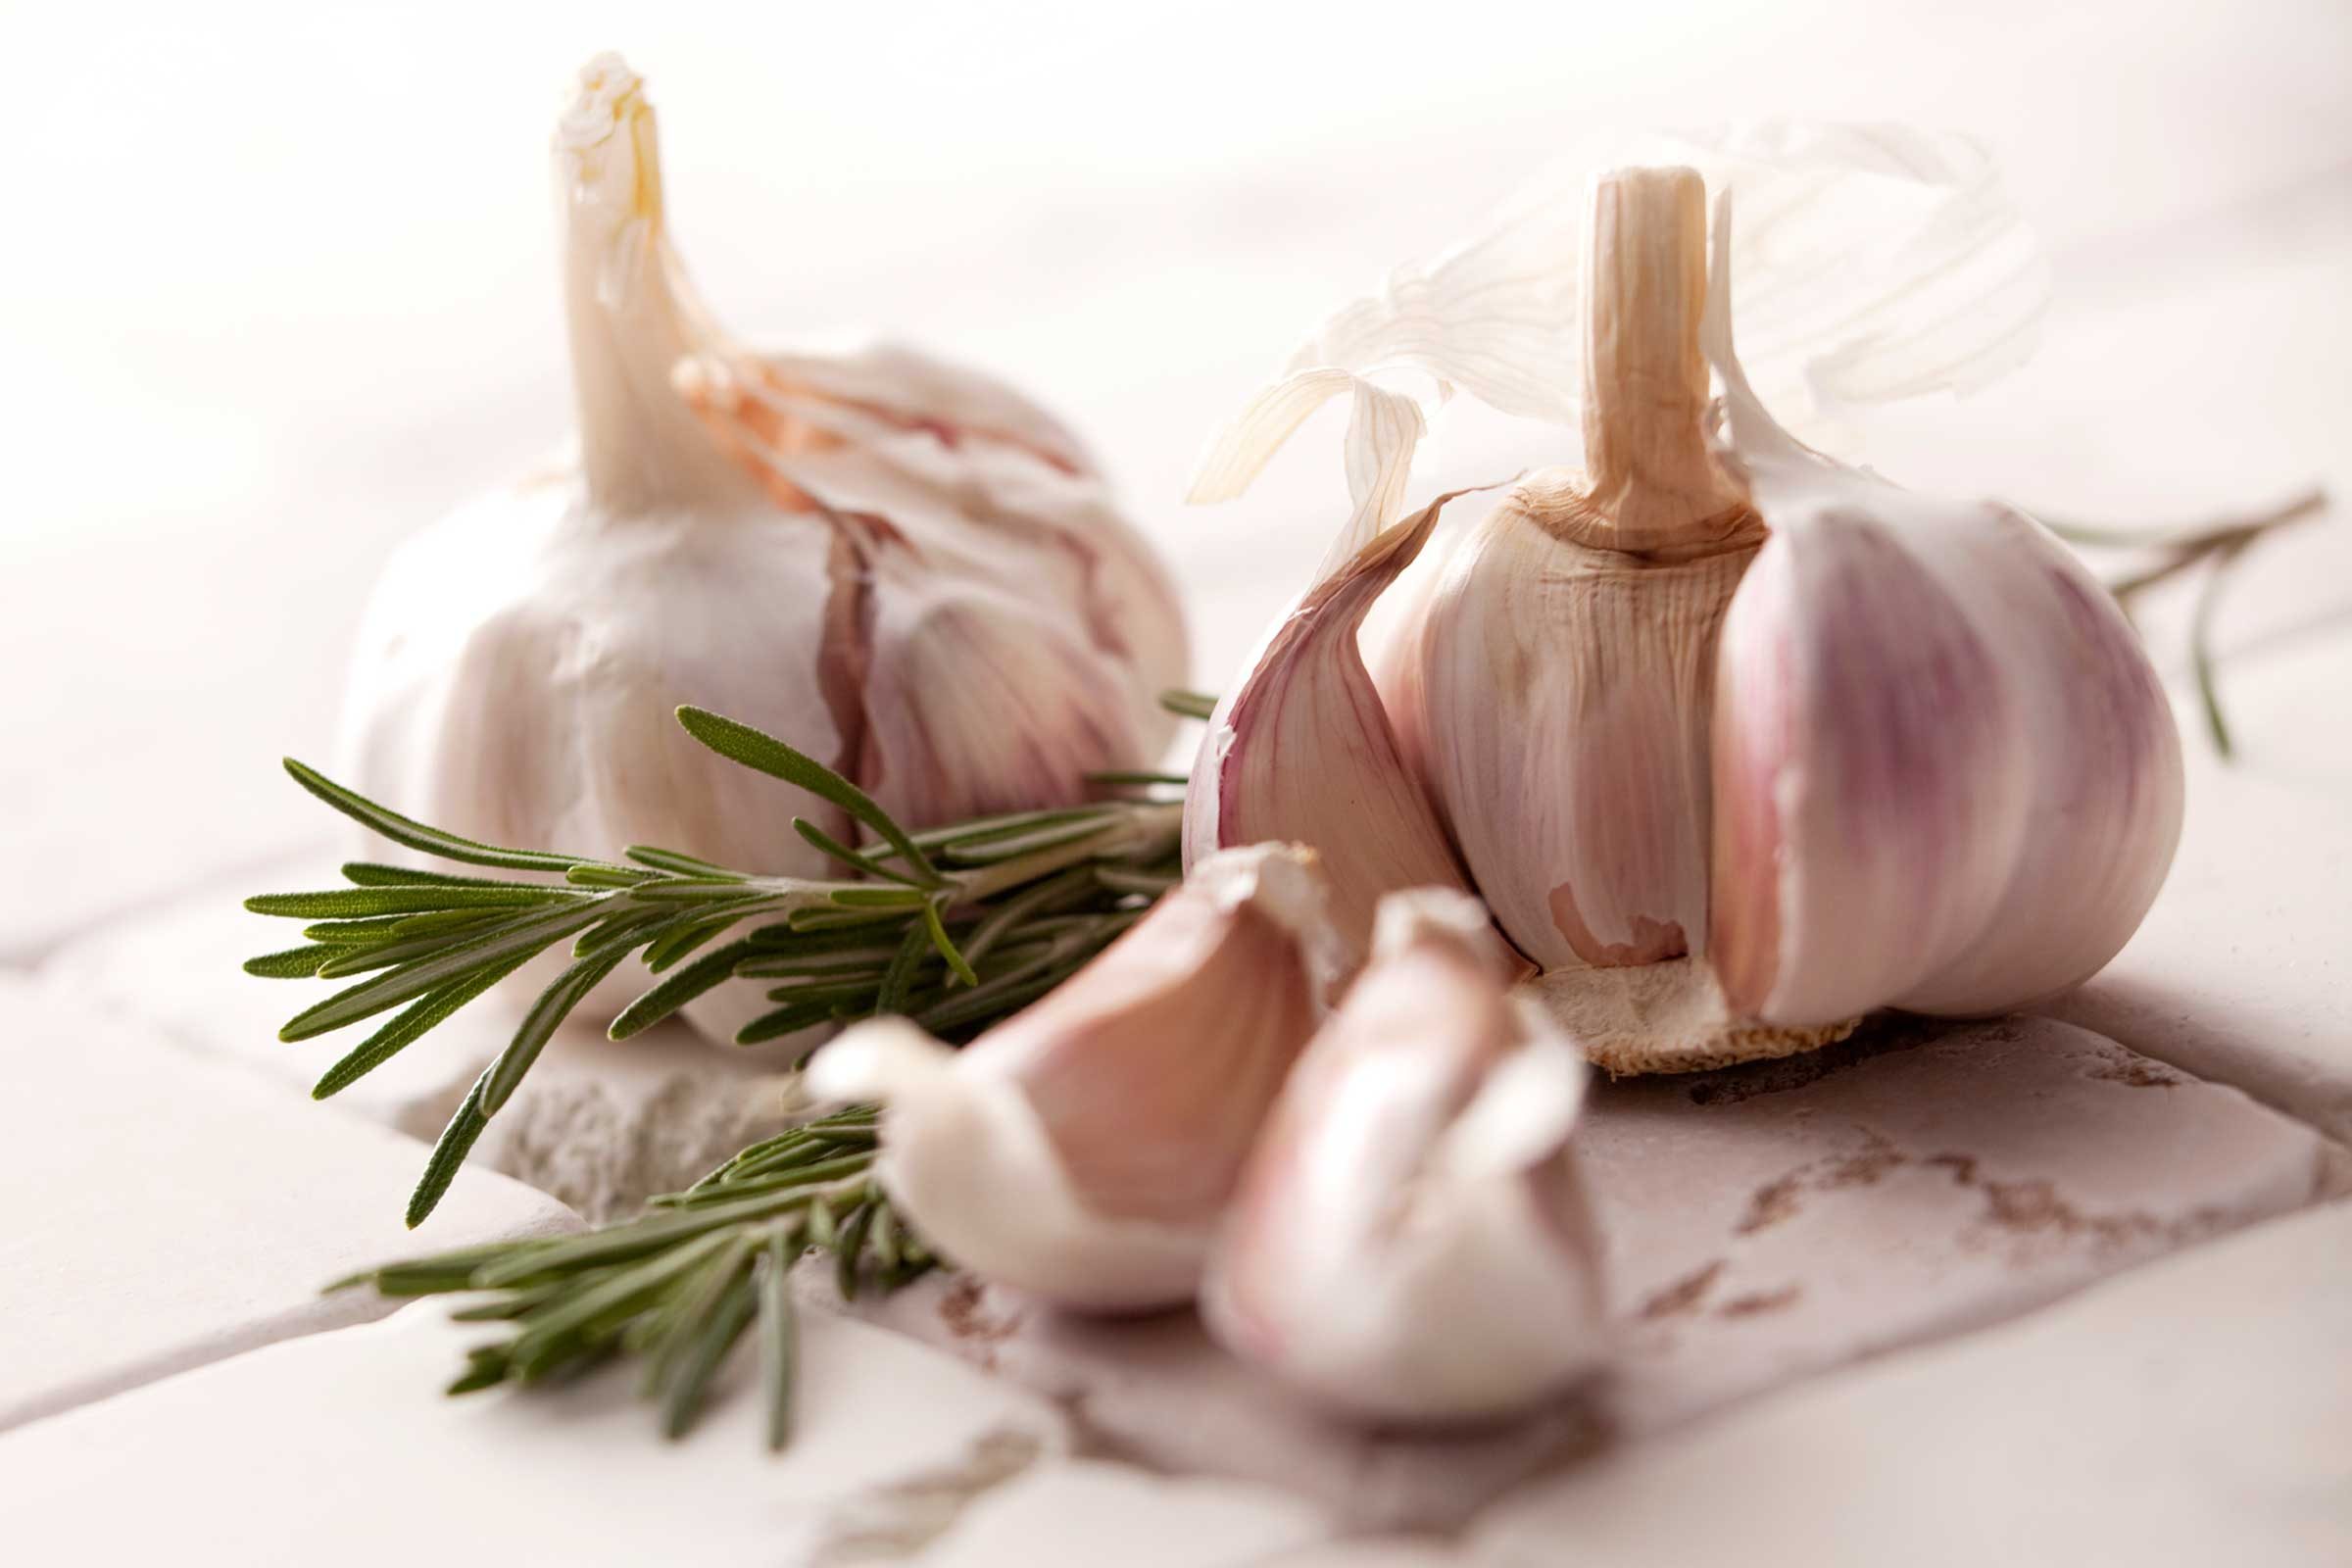 Add garlic to everything you eat